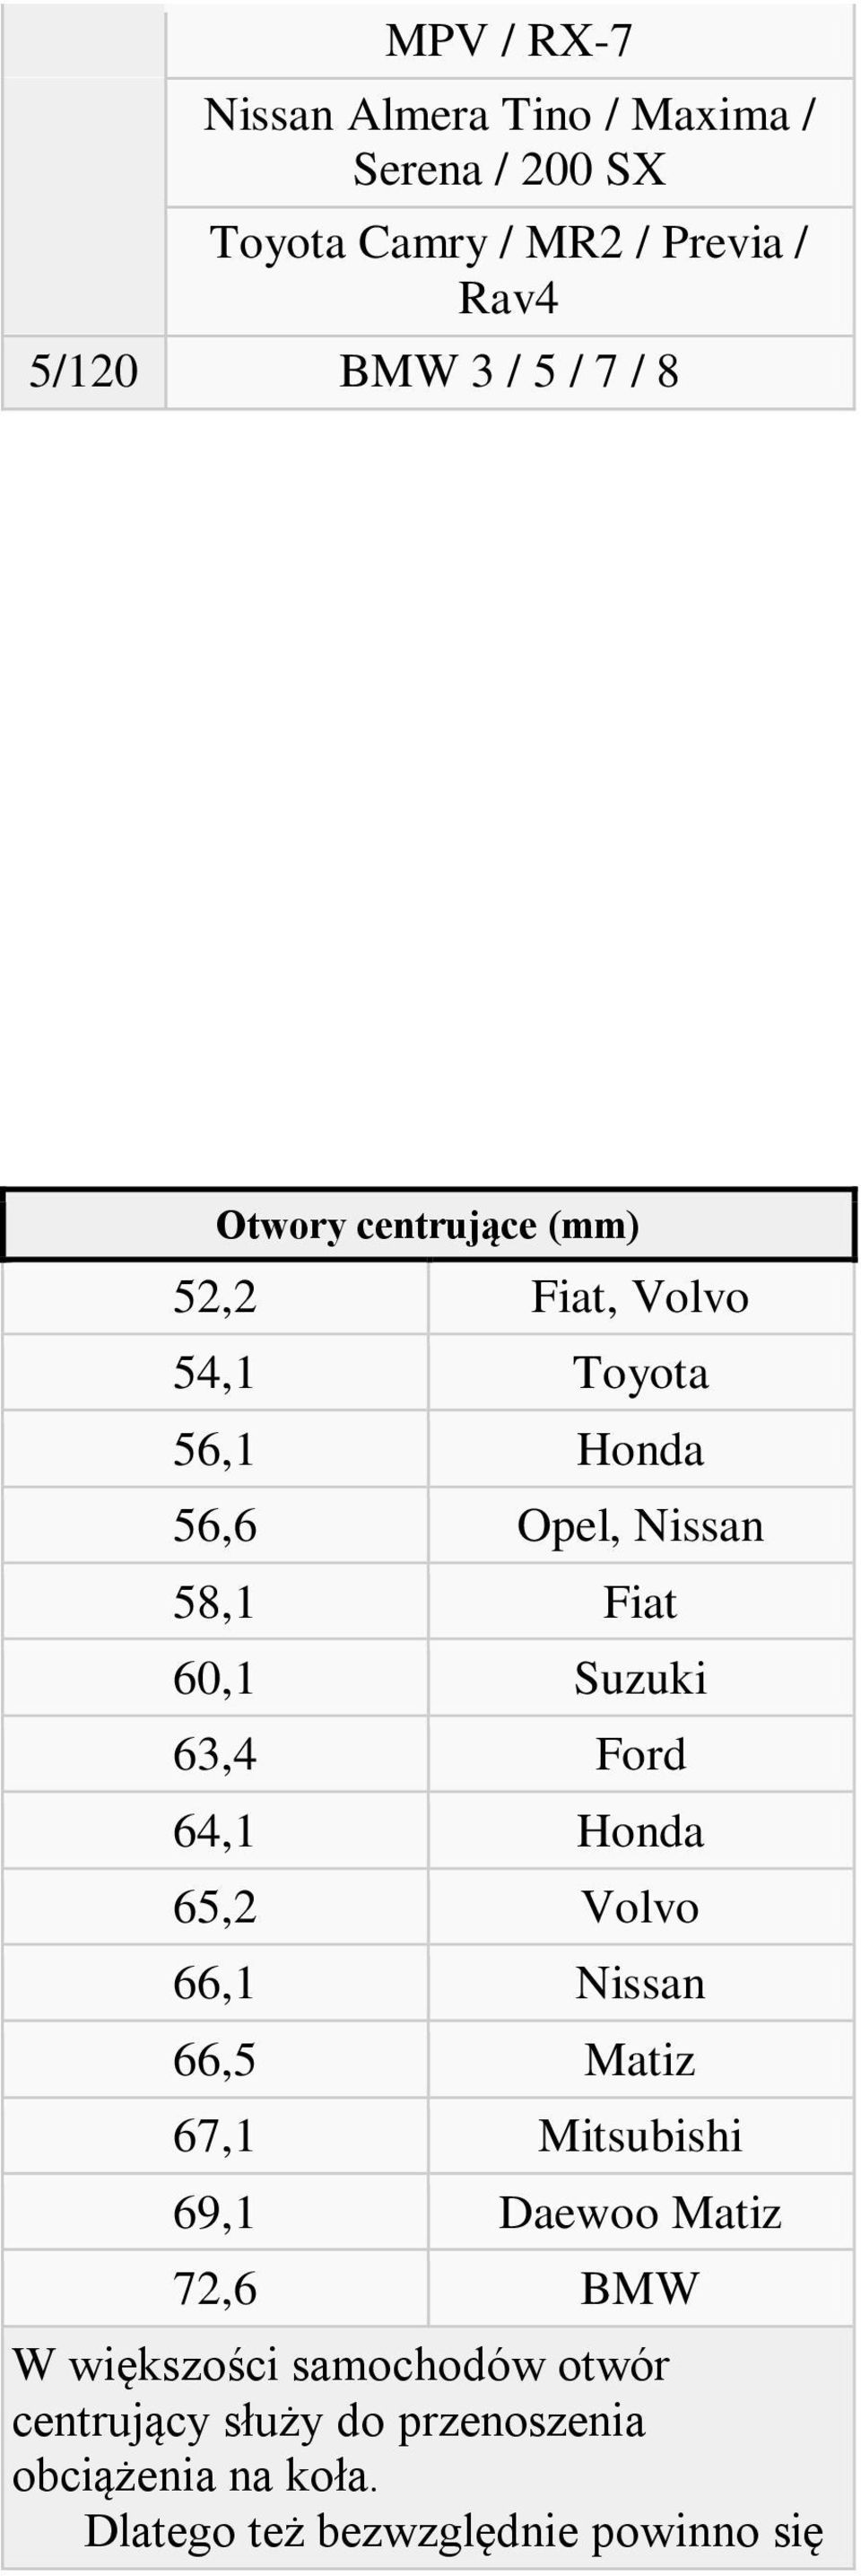 Suzuki 63,4 Ford 64,1 Honda 65,2 Volvo 66,1 Nissan 66,5 Matiz 67,1 Mitsubishi 69,1 Daewoo Matiz 72,6 BMW W